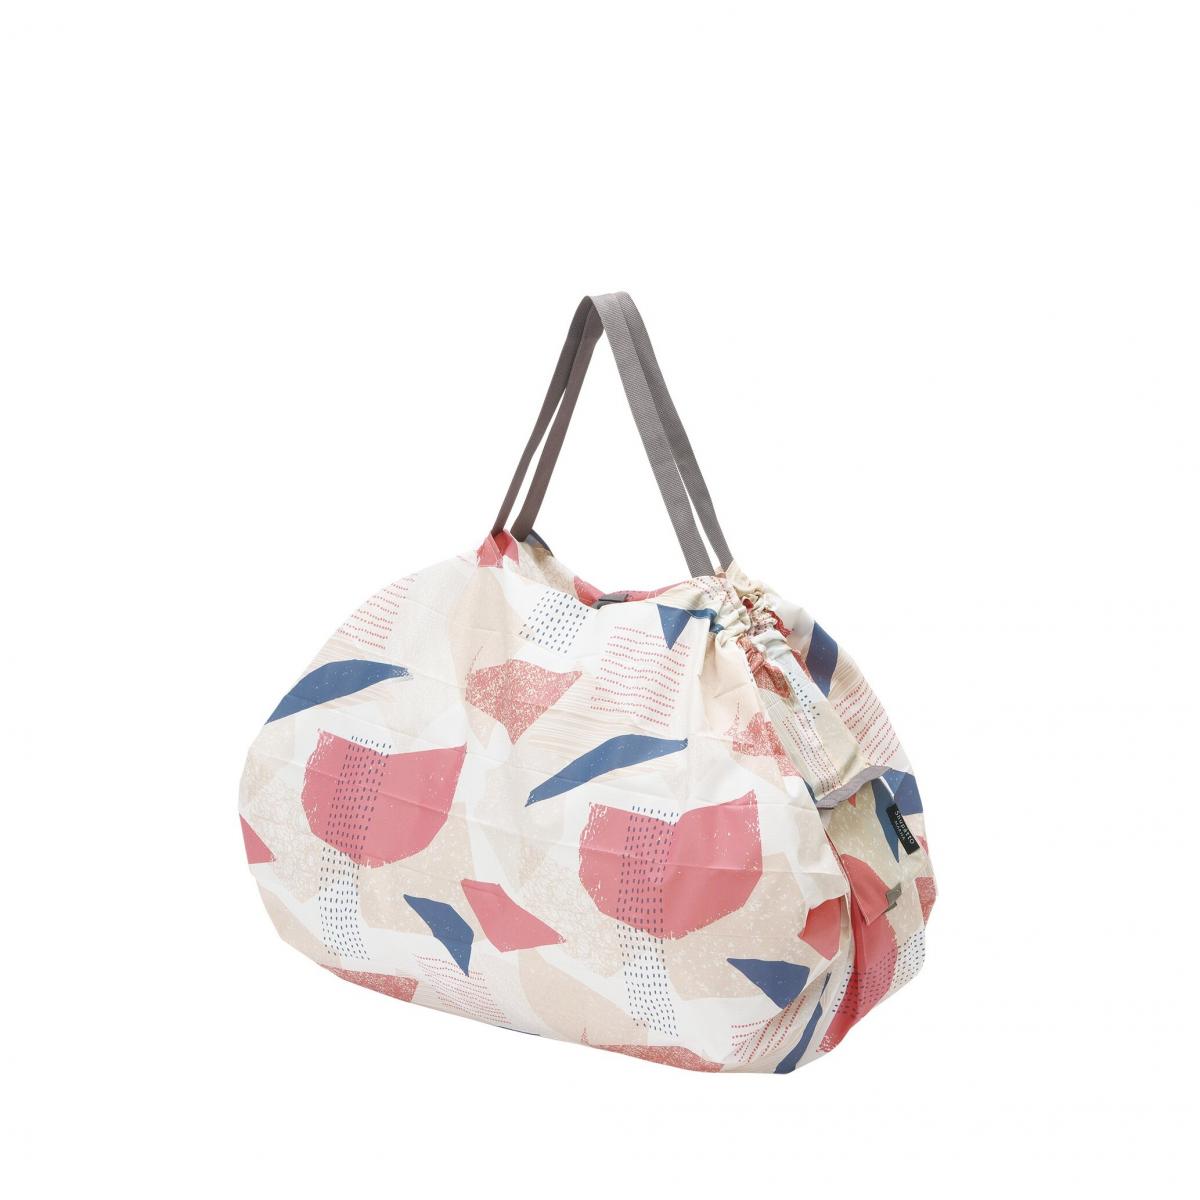 Shupatto - Compact Bag Extremely fast folding storage bag (L SIze)｜Marna｜Shopping bag｜Eco-friendly bag｜Quick storage｜Pocket bag-ARARE (polka dot) 